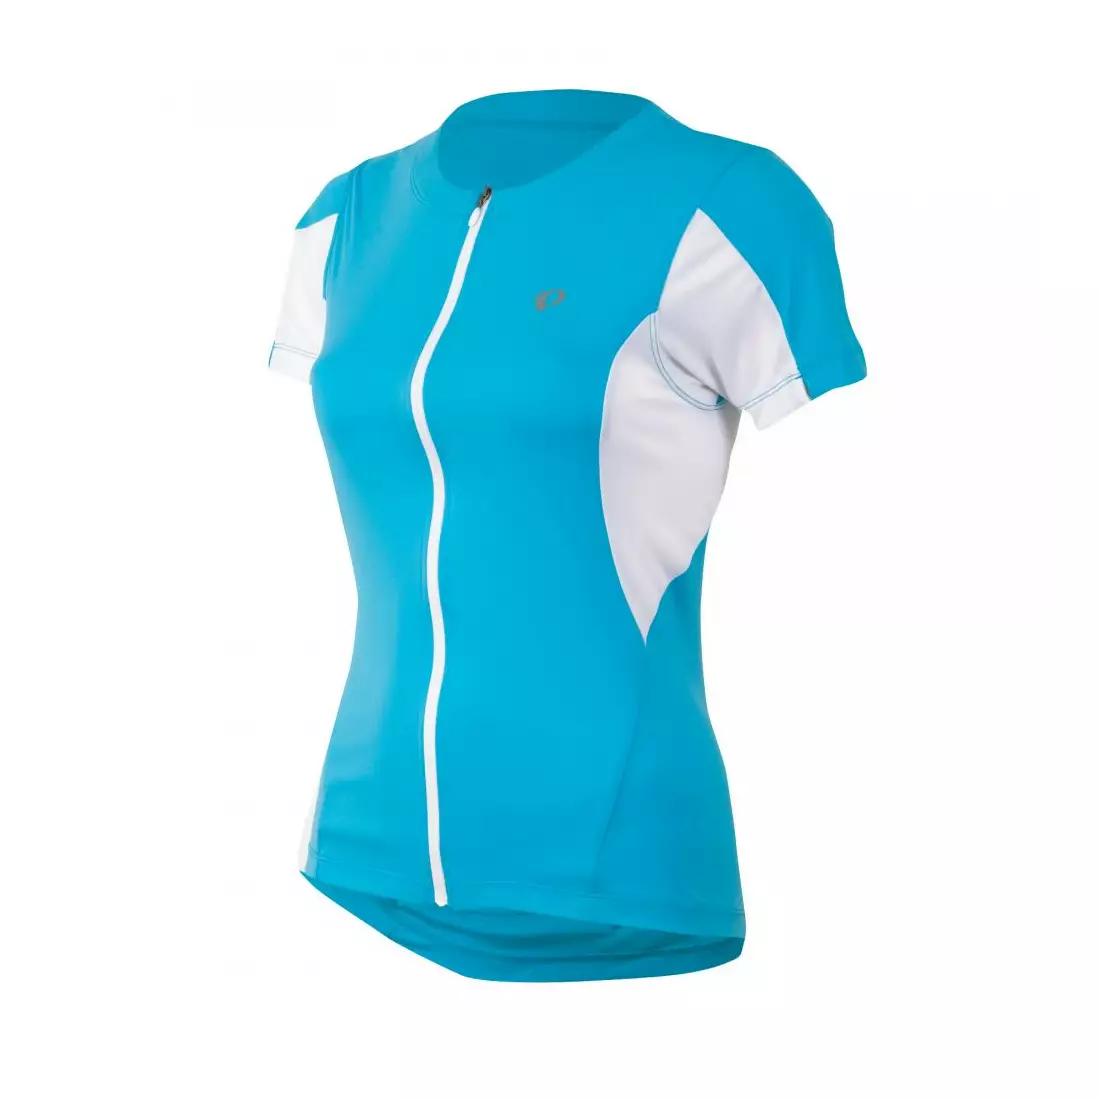 PEARL IZUMI SELECT women's cycling jersey 11221502-4LV